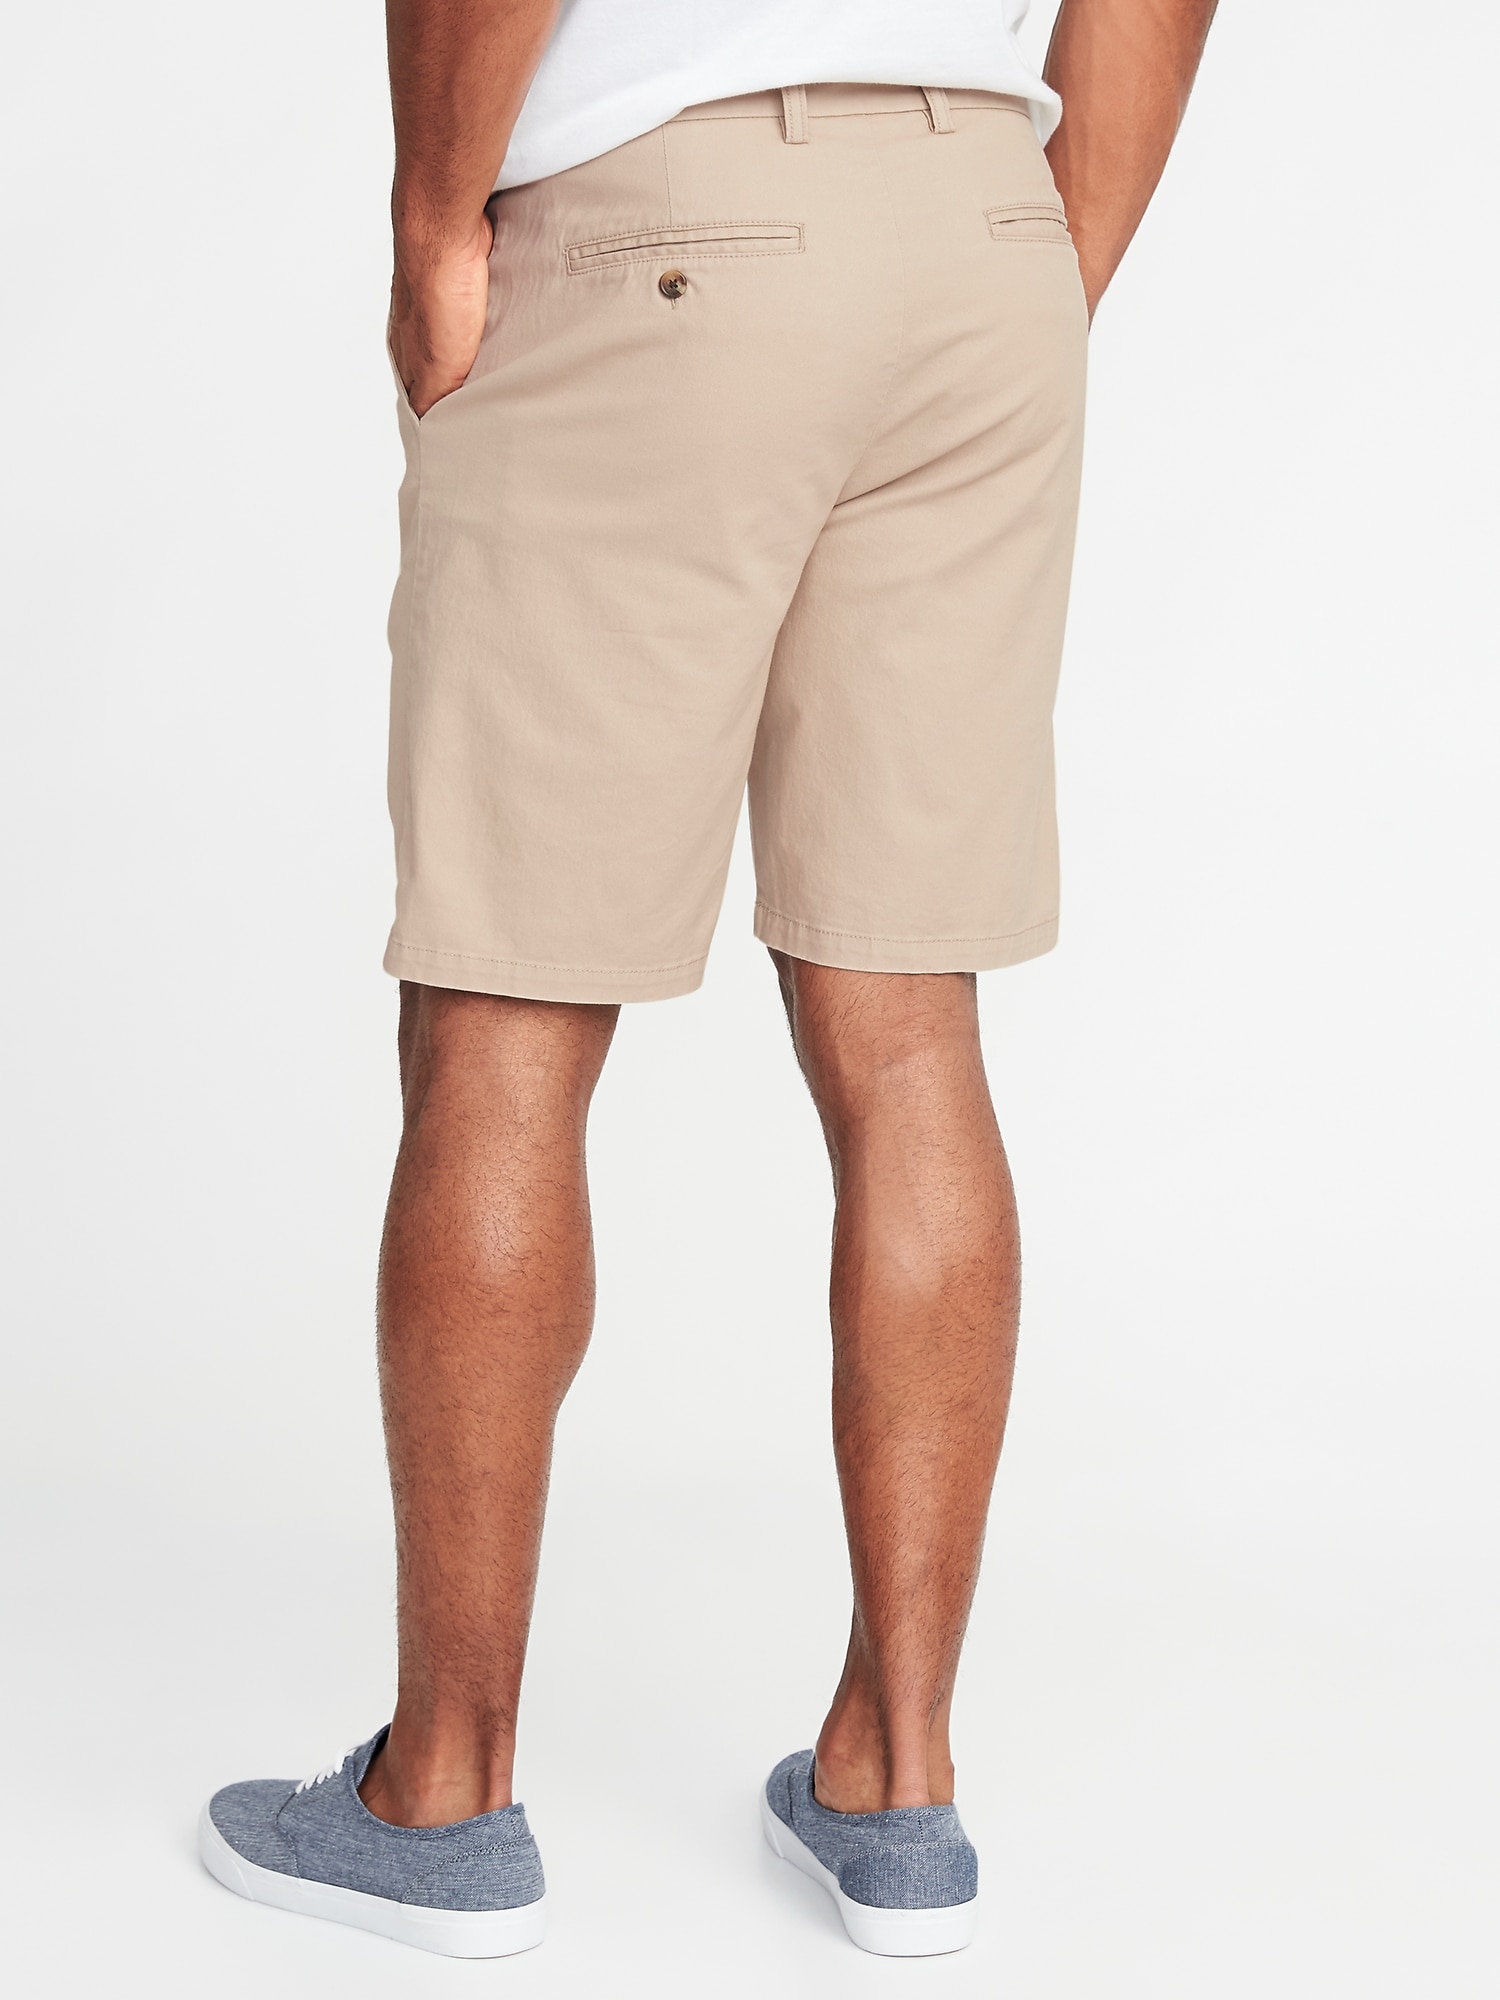 Slim Ultimate Shorts for Men - 10 inch inseam | Old Navy